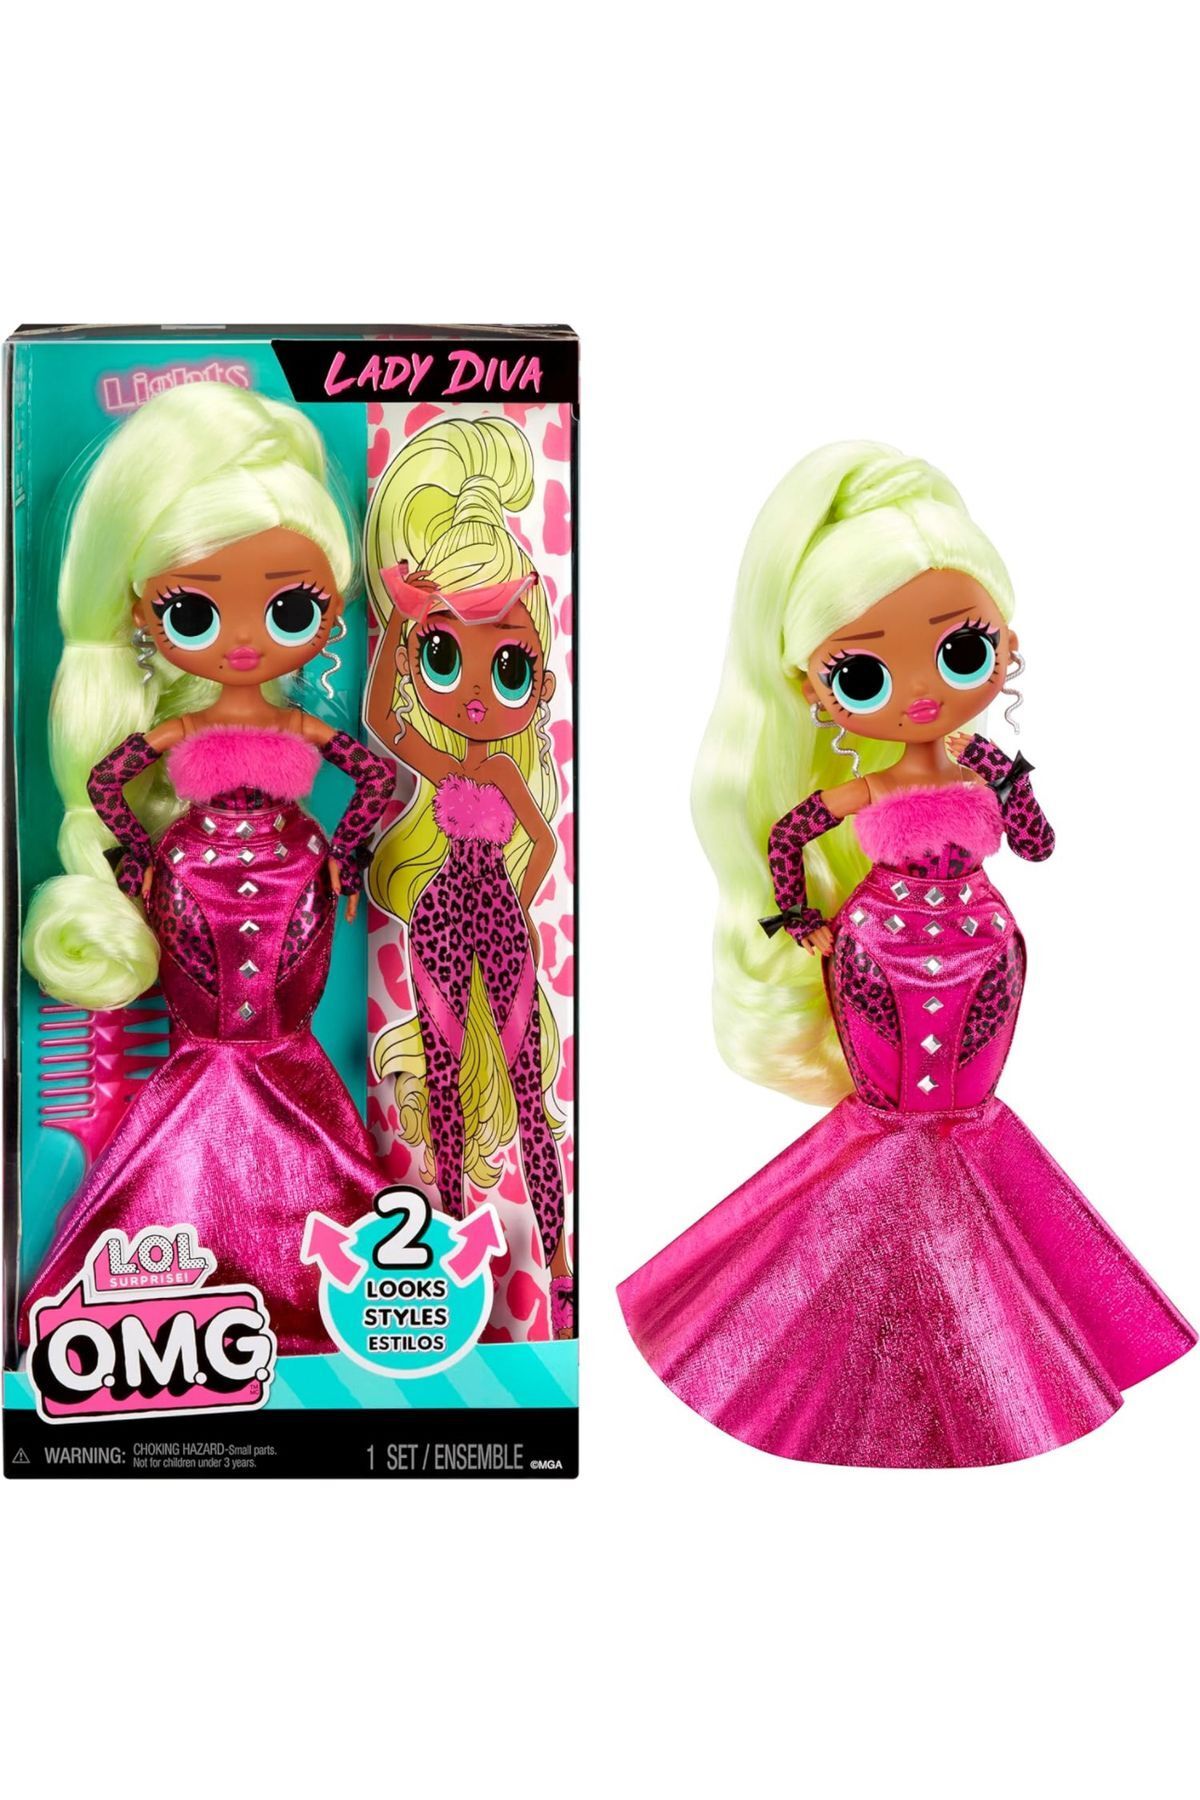 L.O.L. SURPRISE LOL Surprise OMG Fashion Doll - Lady Diva